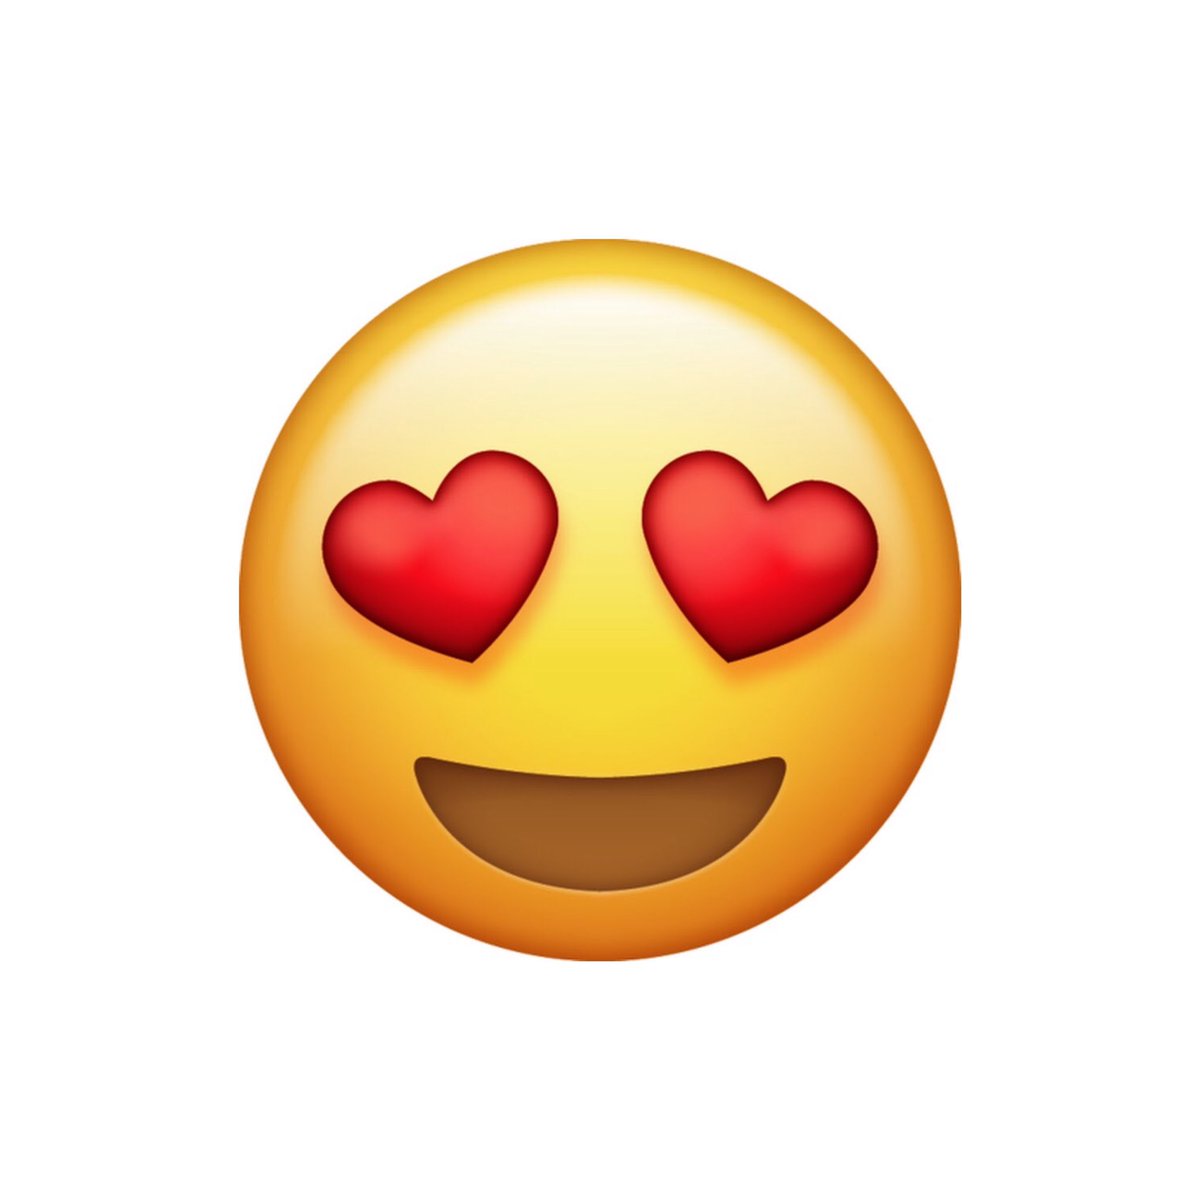 paul wesley as emojis; a thread